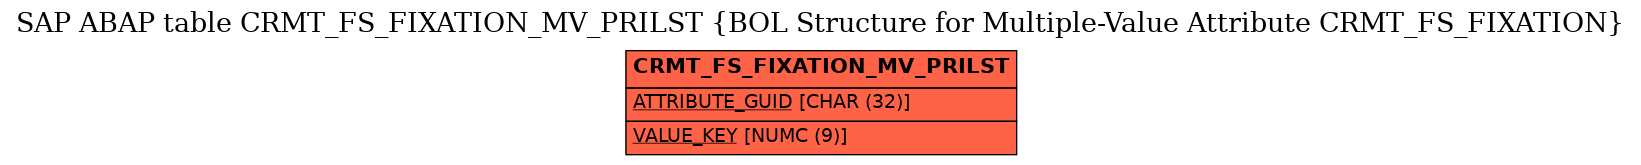 E-R Diagram for table CRMT_FS_FIXATION_MV_PRILST (BOL Structure for Multiple-Value Attribute CRMT_FS_FIXATION)